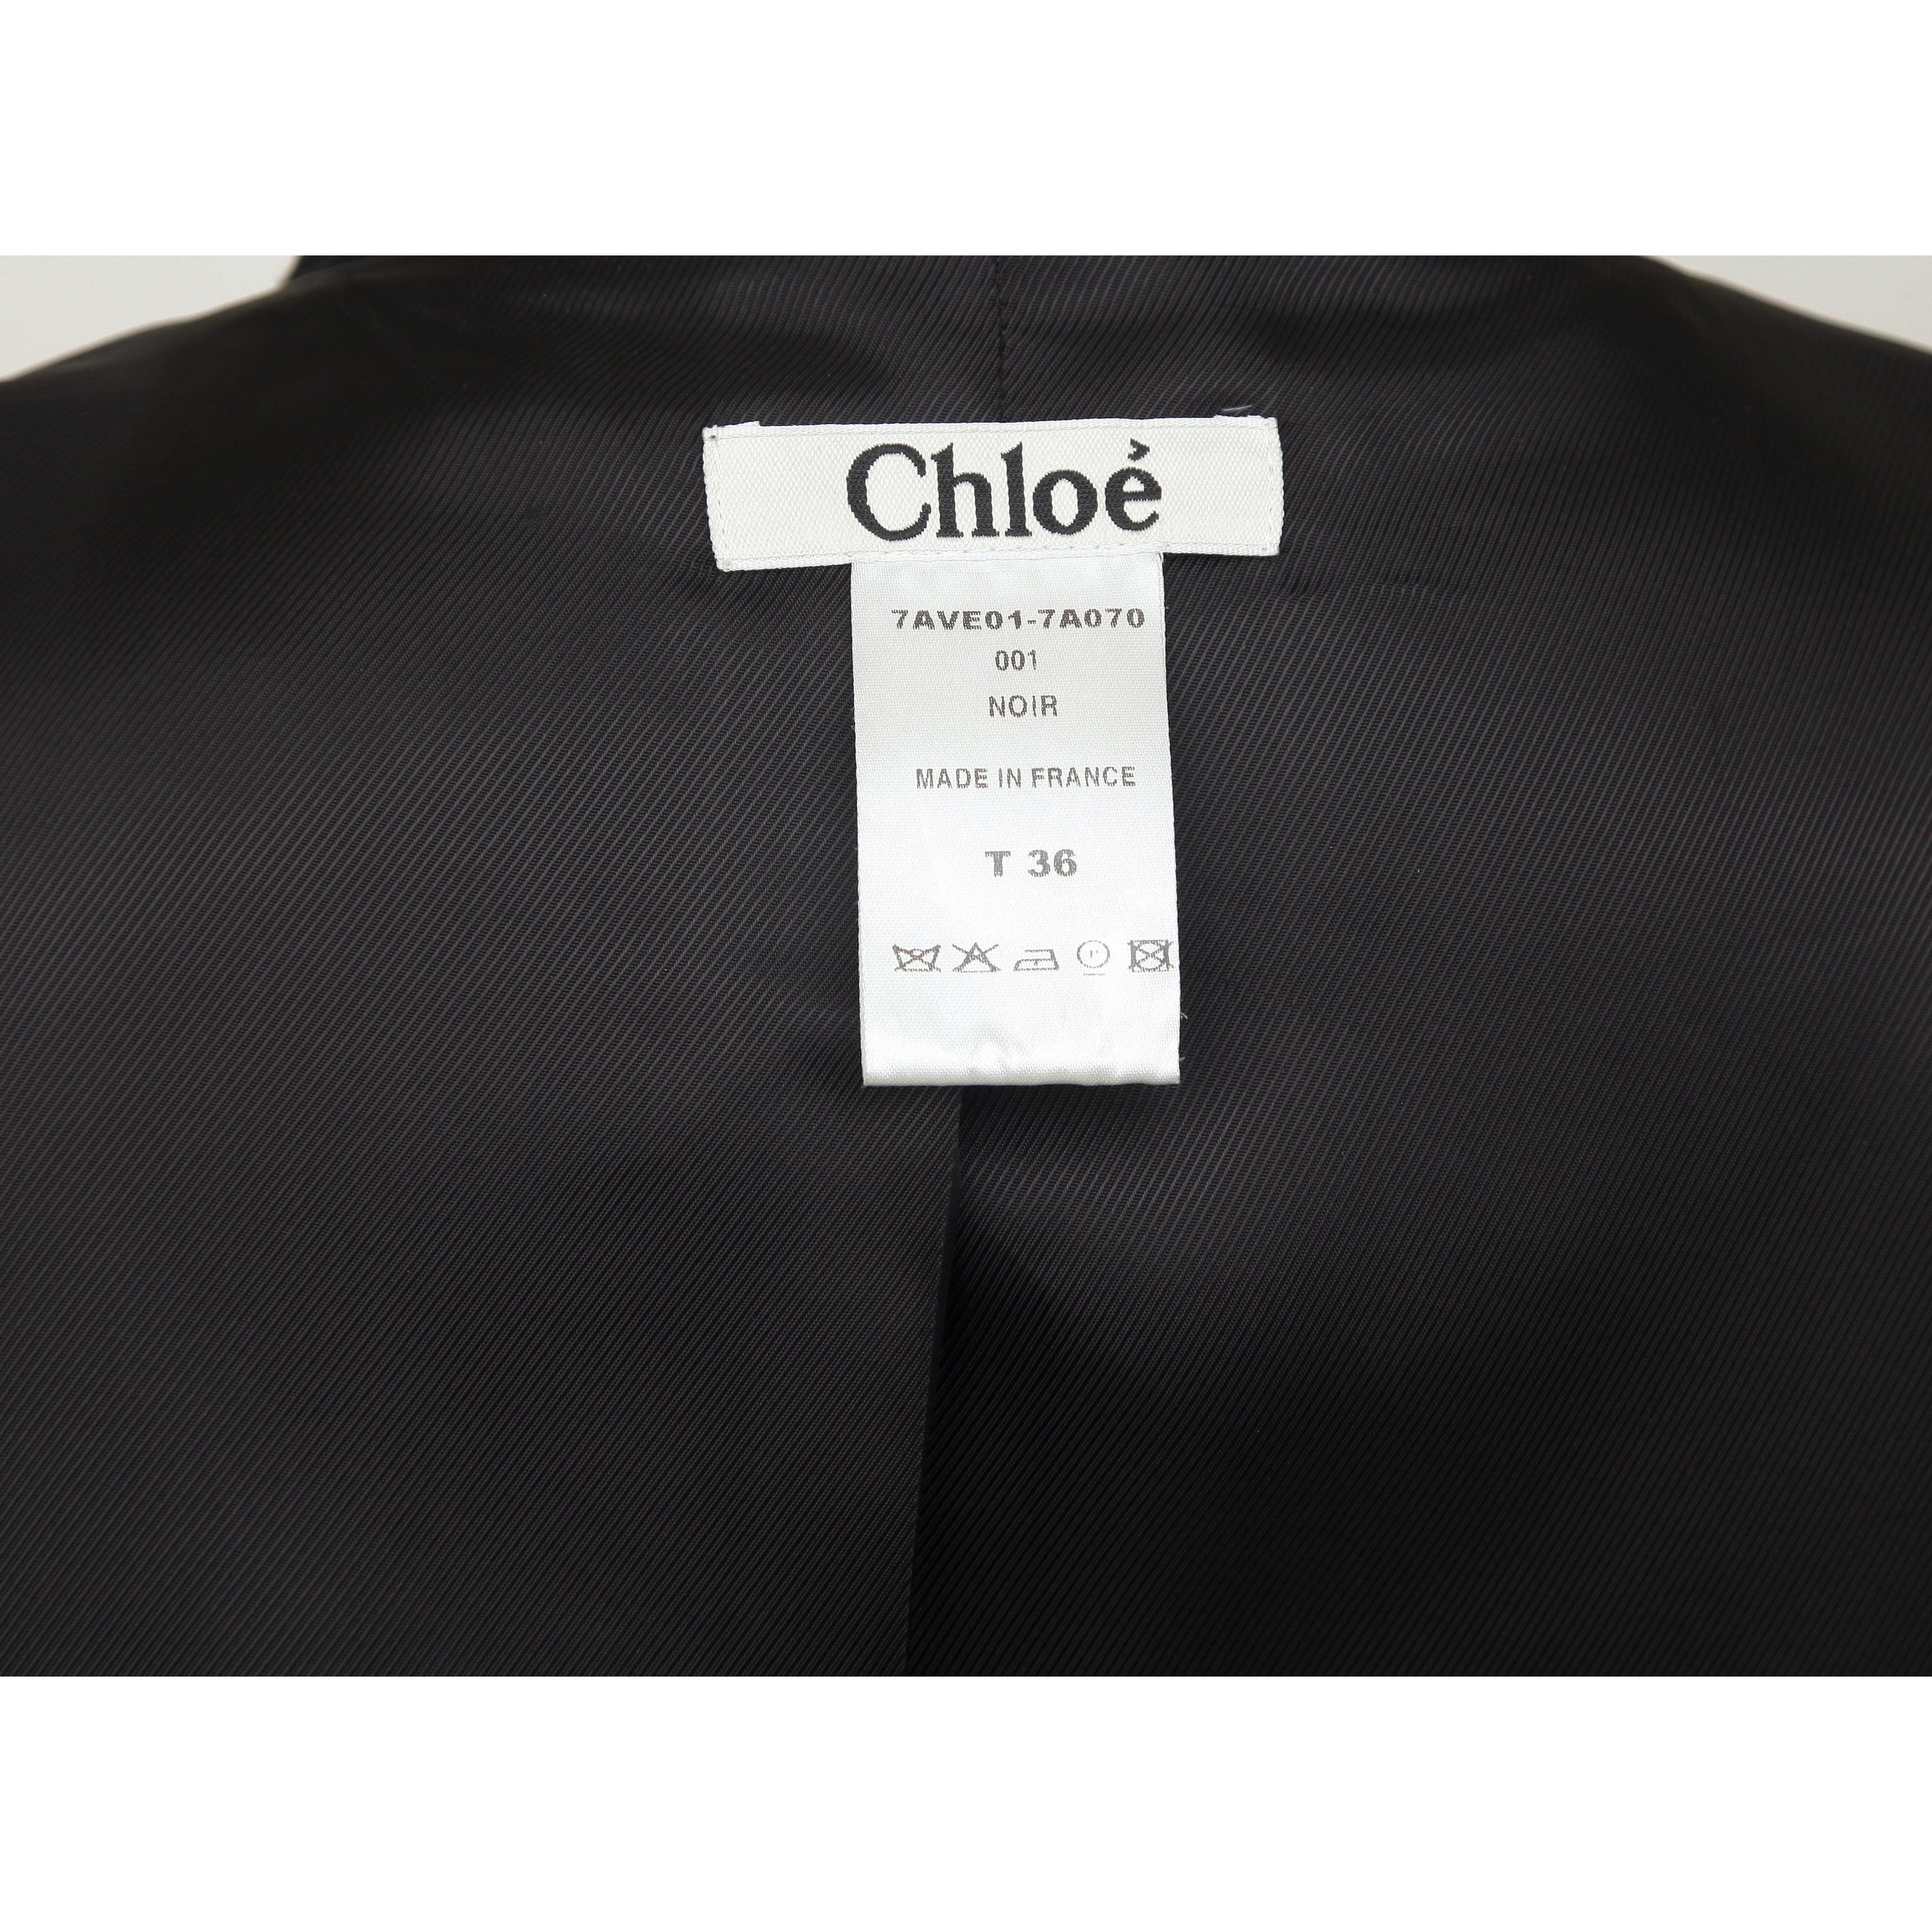 CHLOE Black Coat Jacket Long Sleeve Zipper Stand Up Collar Sz 36 2007 For Sale 1